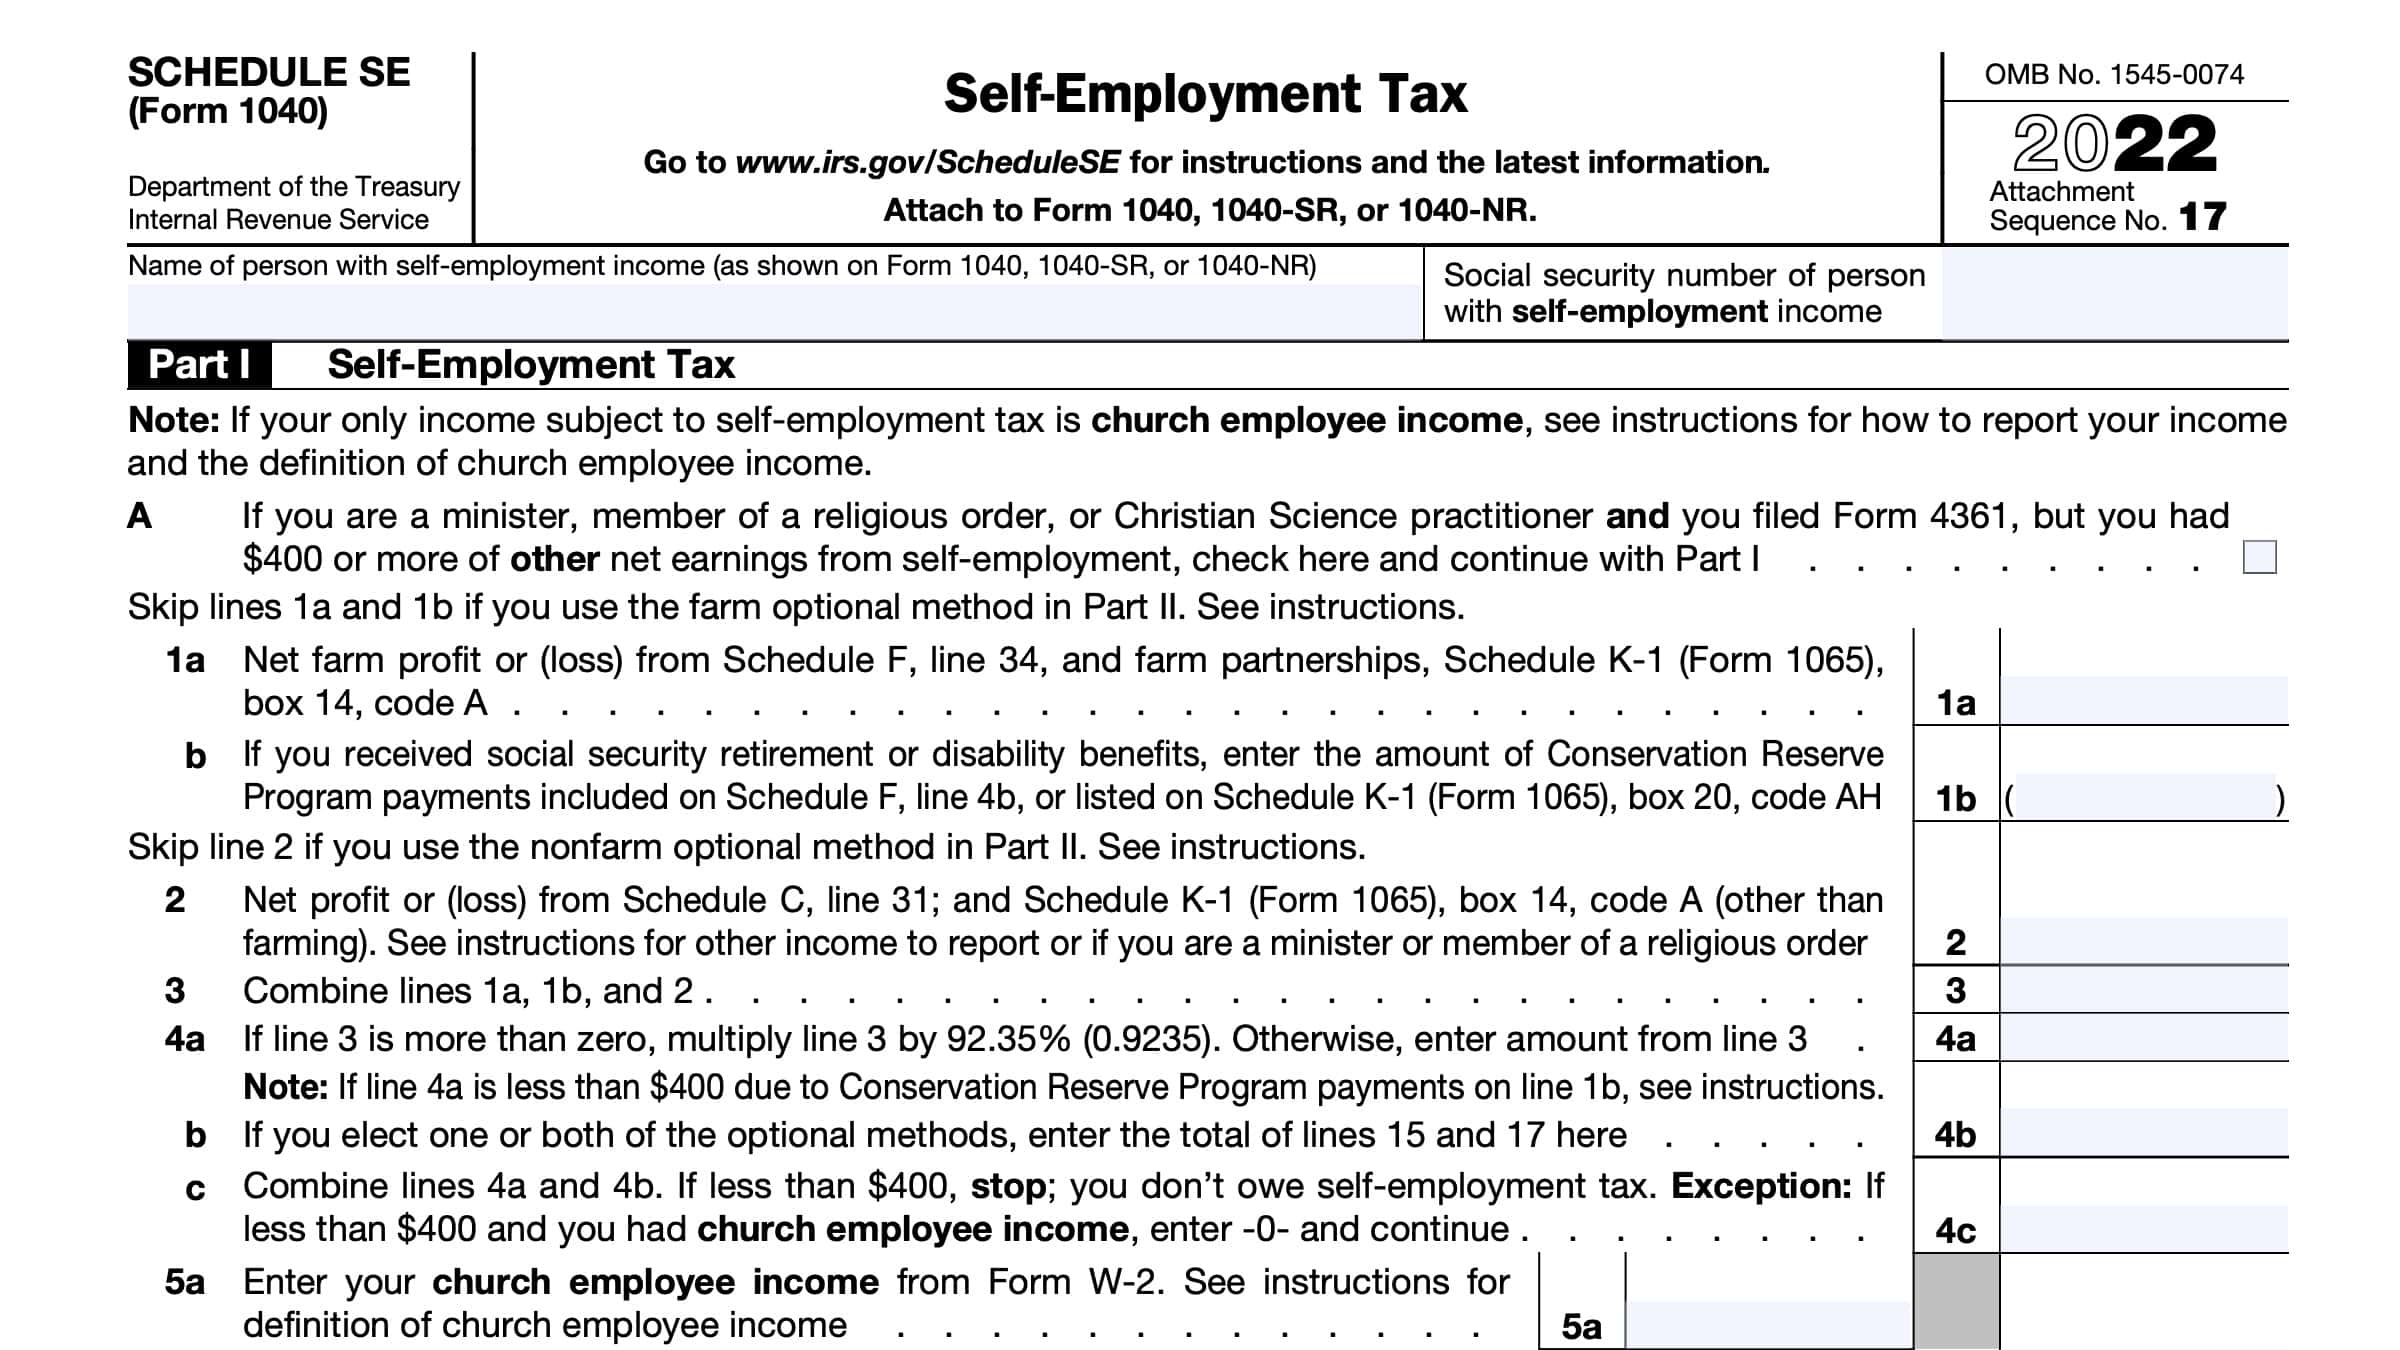 Schedule SE Instructions - Self-Employment Tax